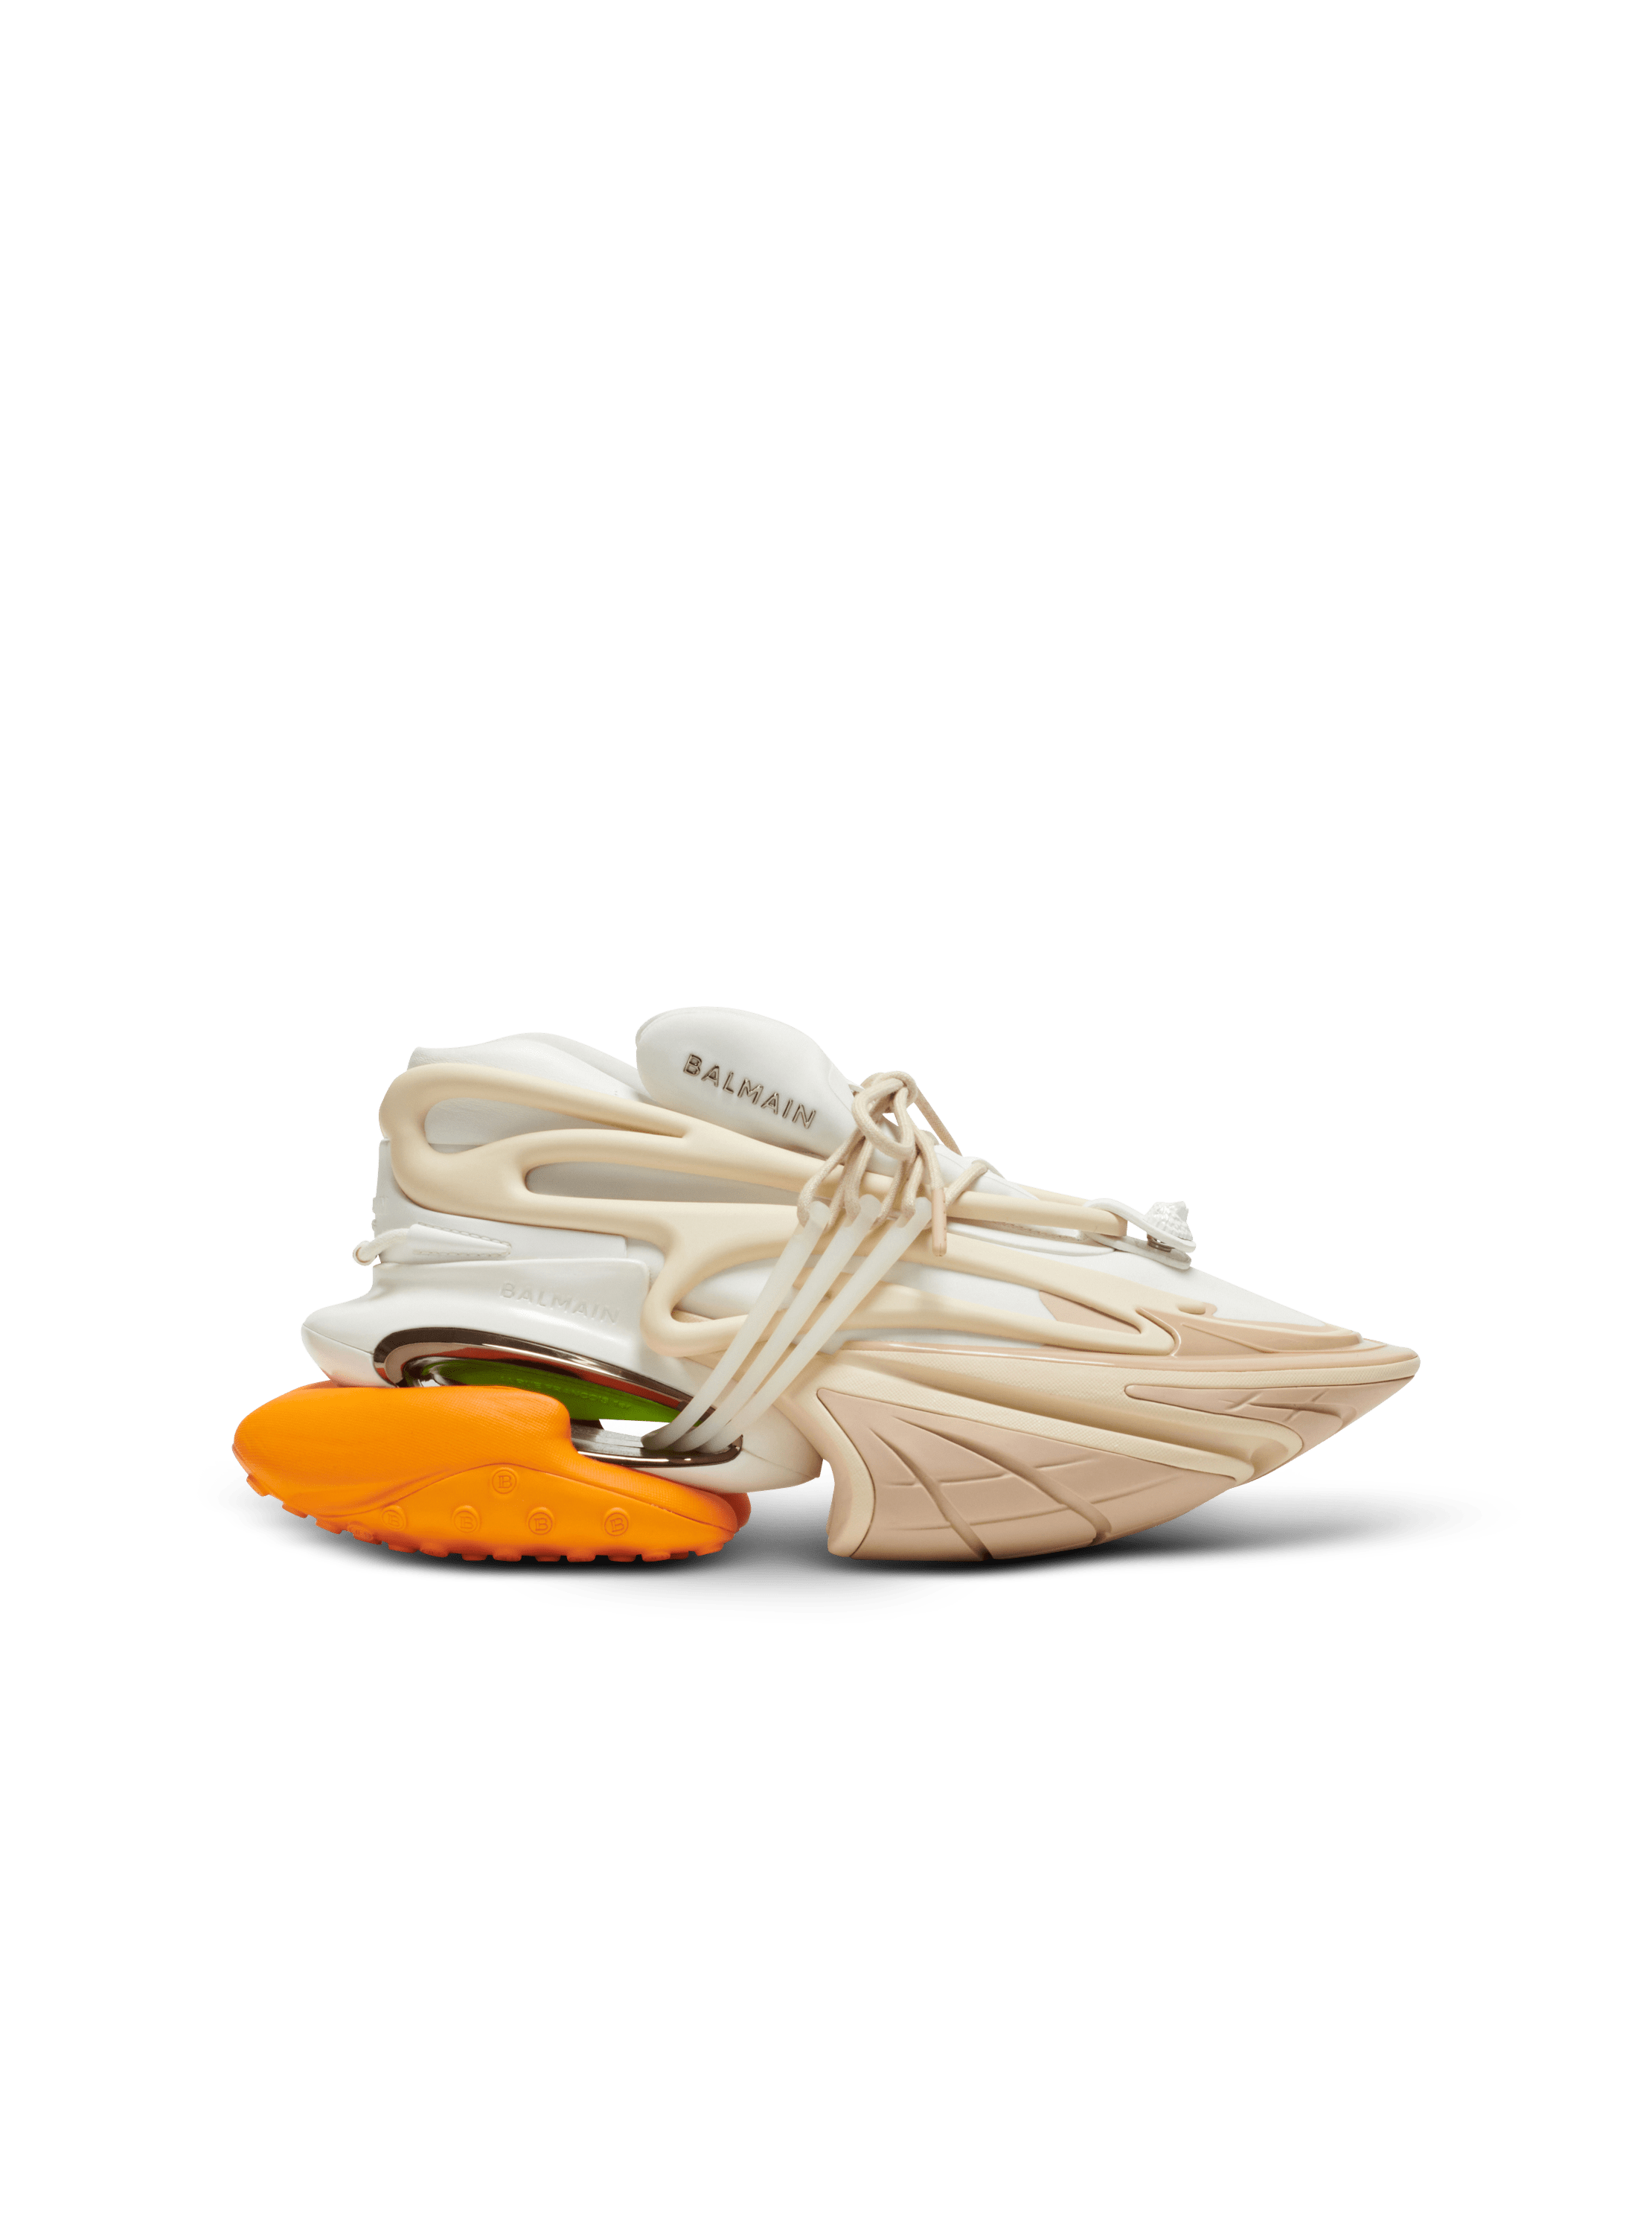 Sneakers Unicorn aus Neopren und Leder, orange, hi-res